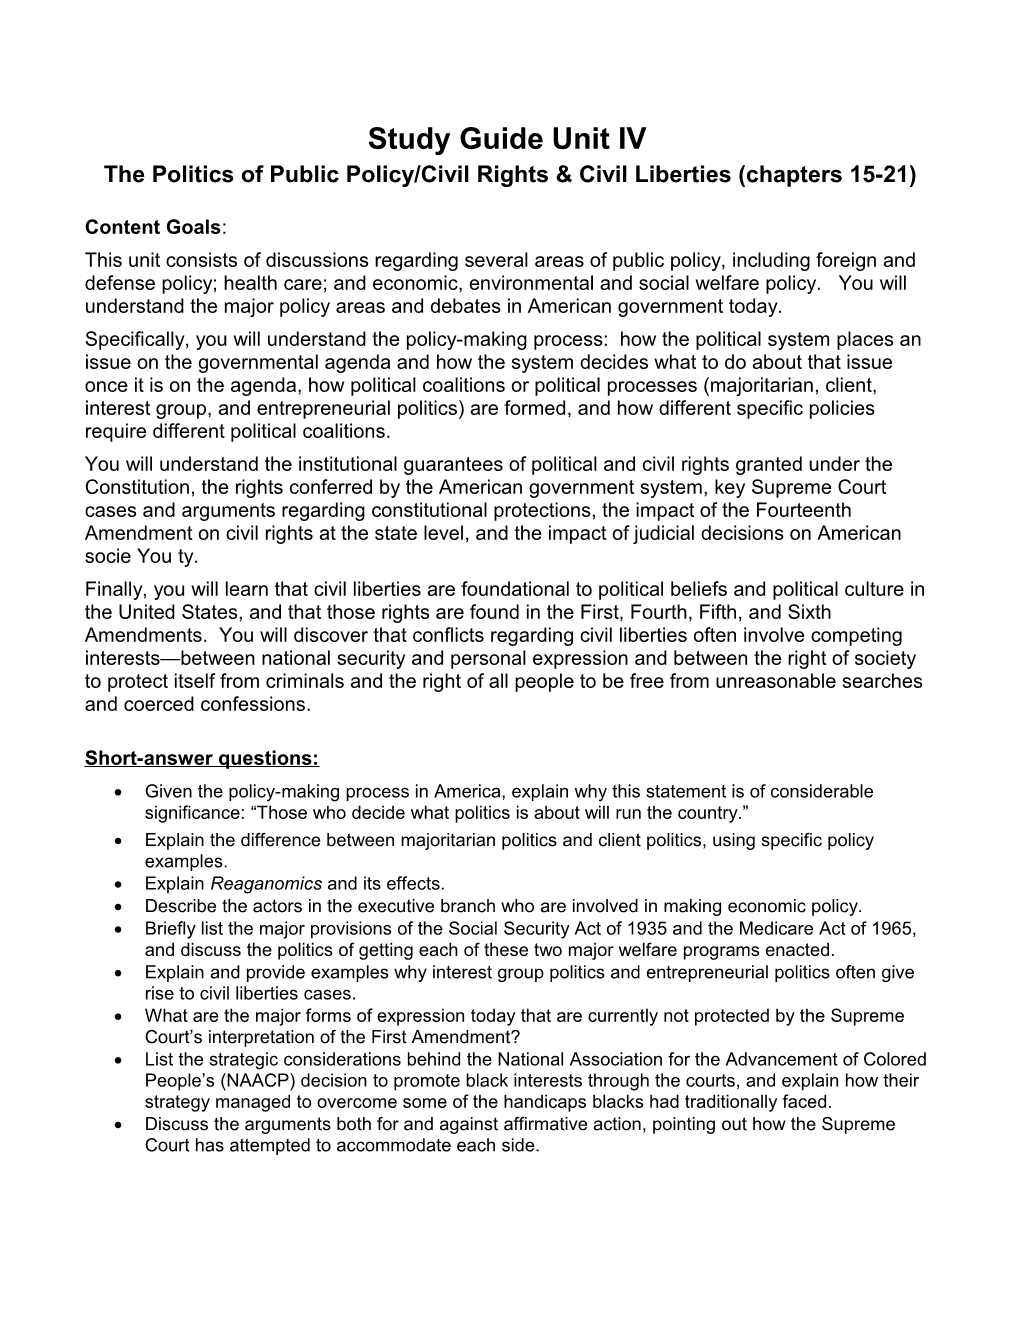 Unit IV the Politics of Public Policy/Civil Rights & Civil Liberties (Chapters 15-21)